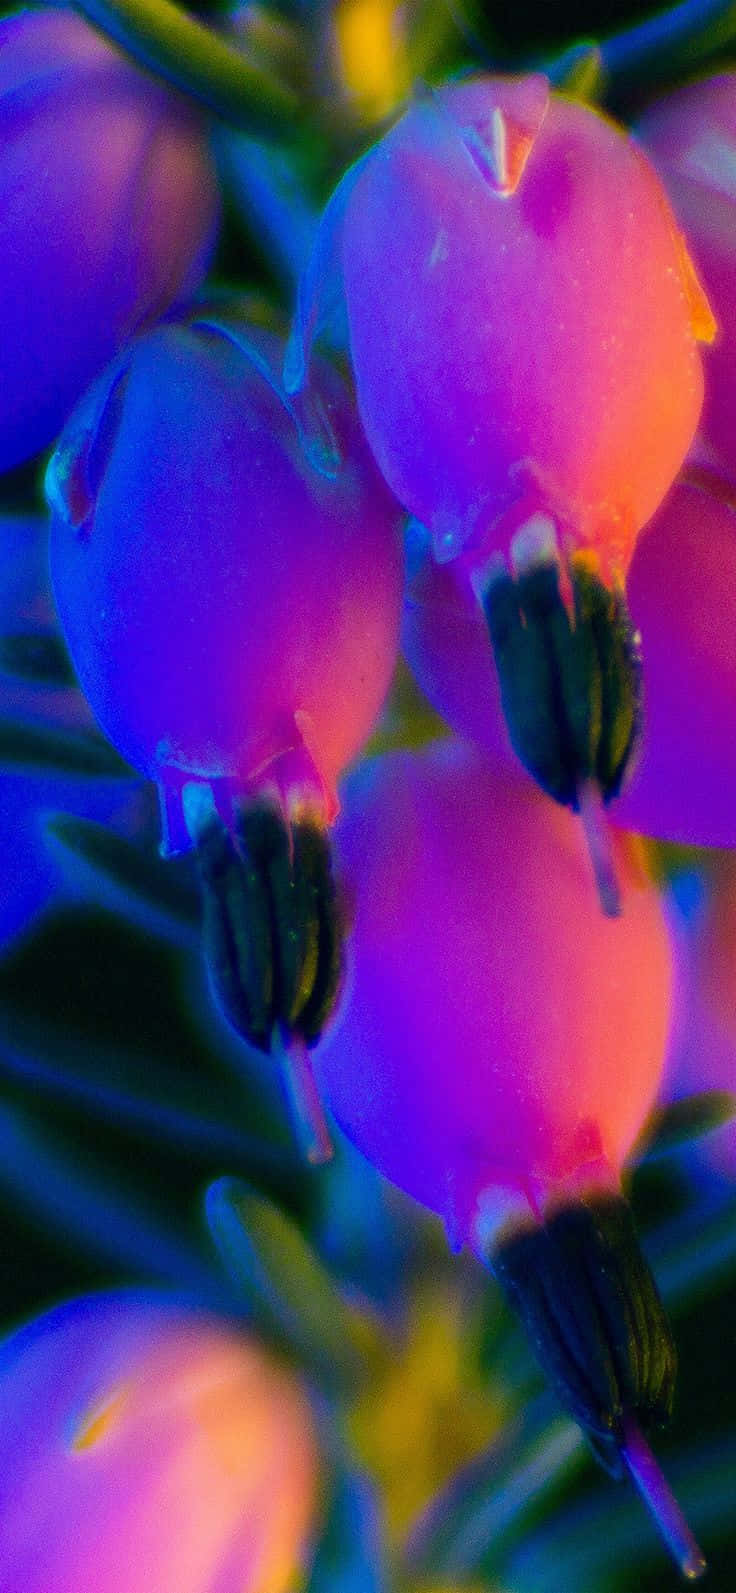 Glowing Rainbow Flower Splashed Across An Iphone Wallpaper